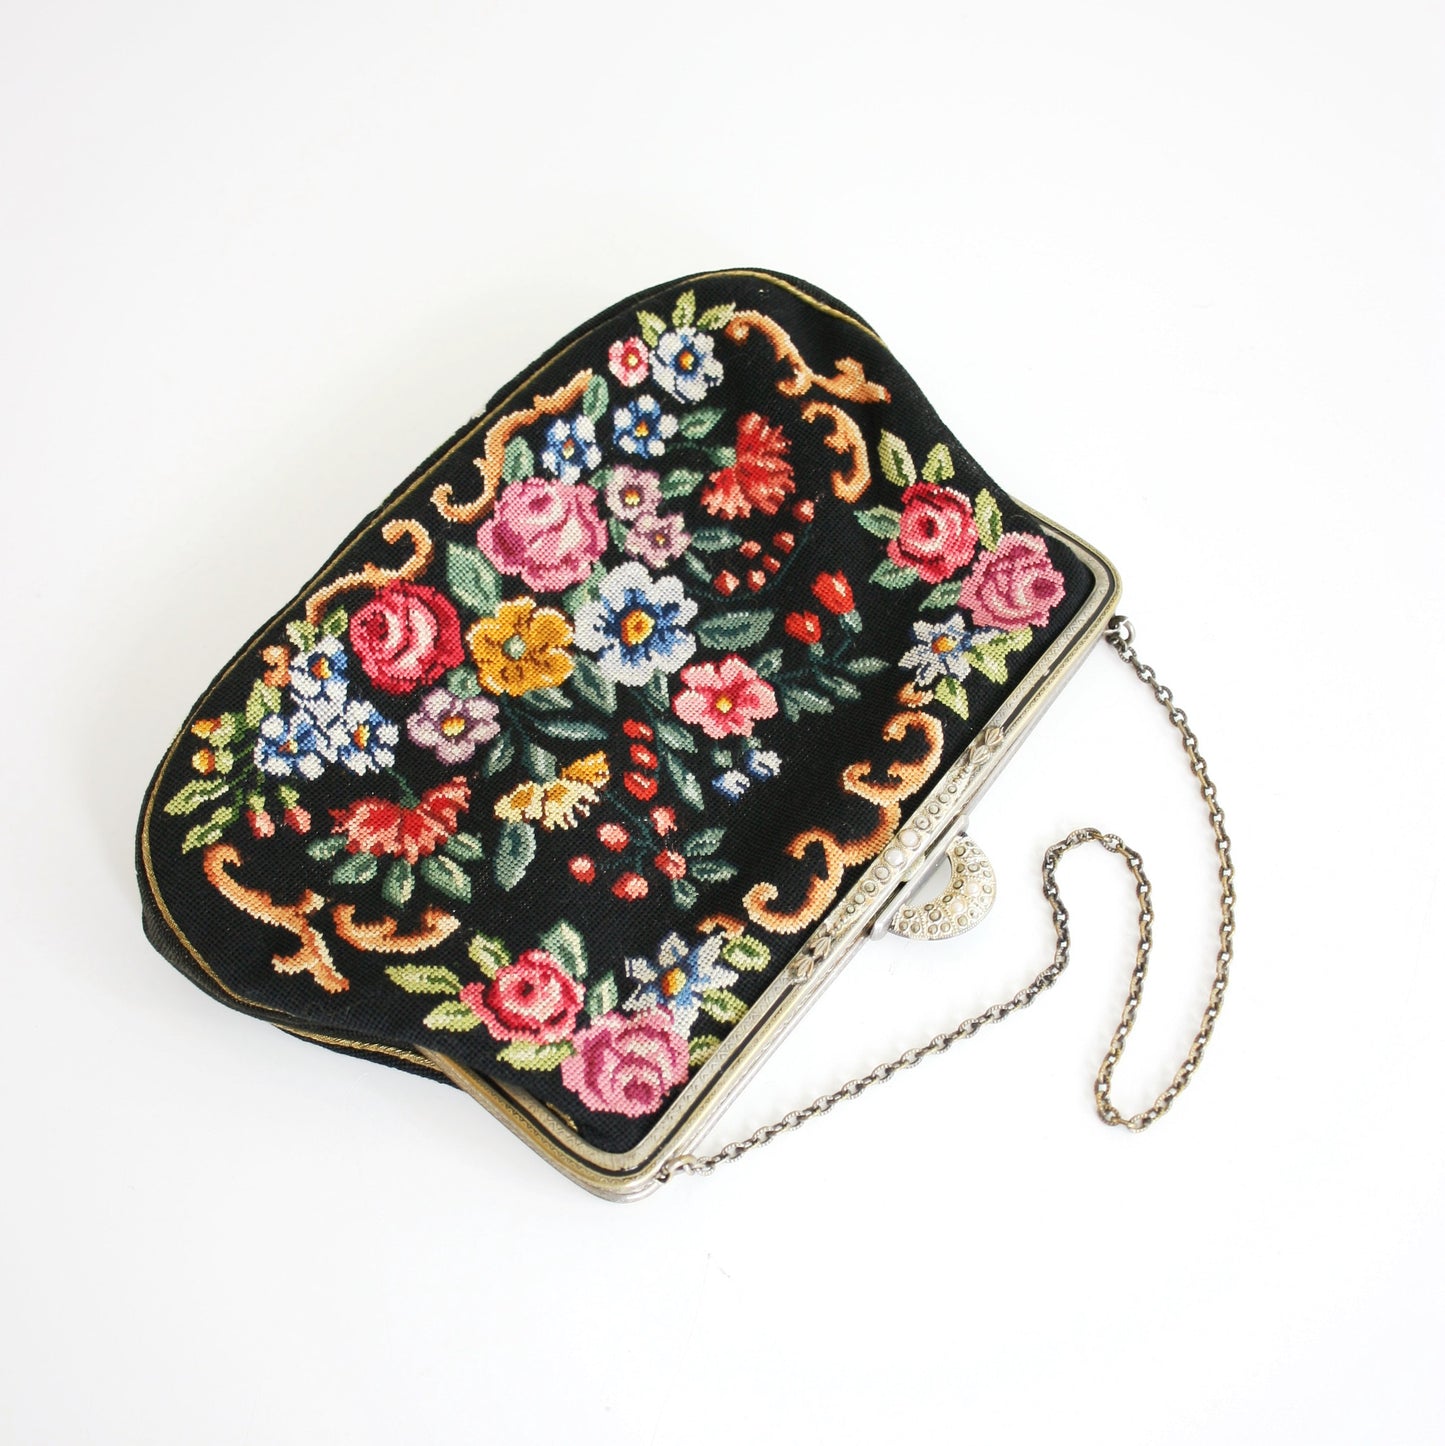 SOLD - Vintage Floral Needlepoint Purse / Antique Petit Point Handbag